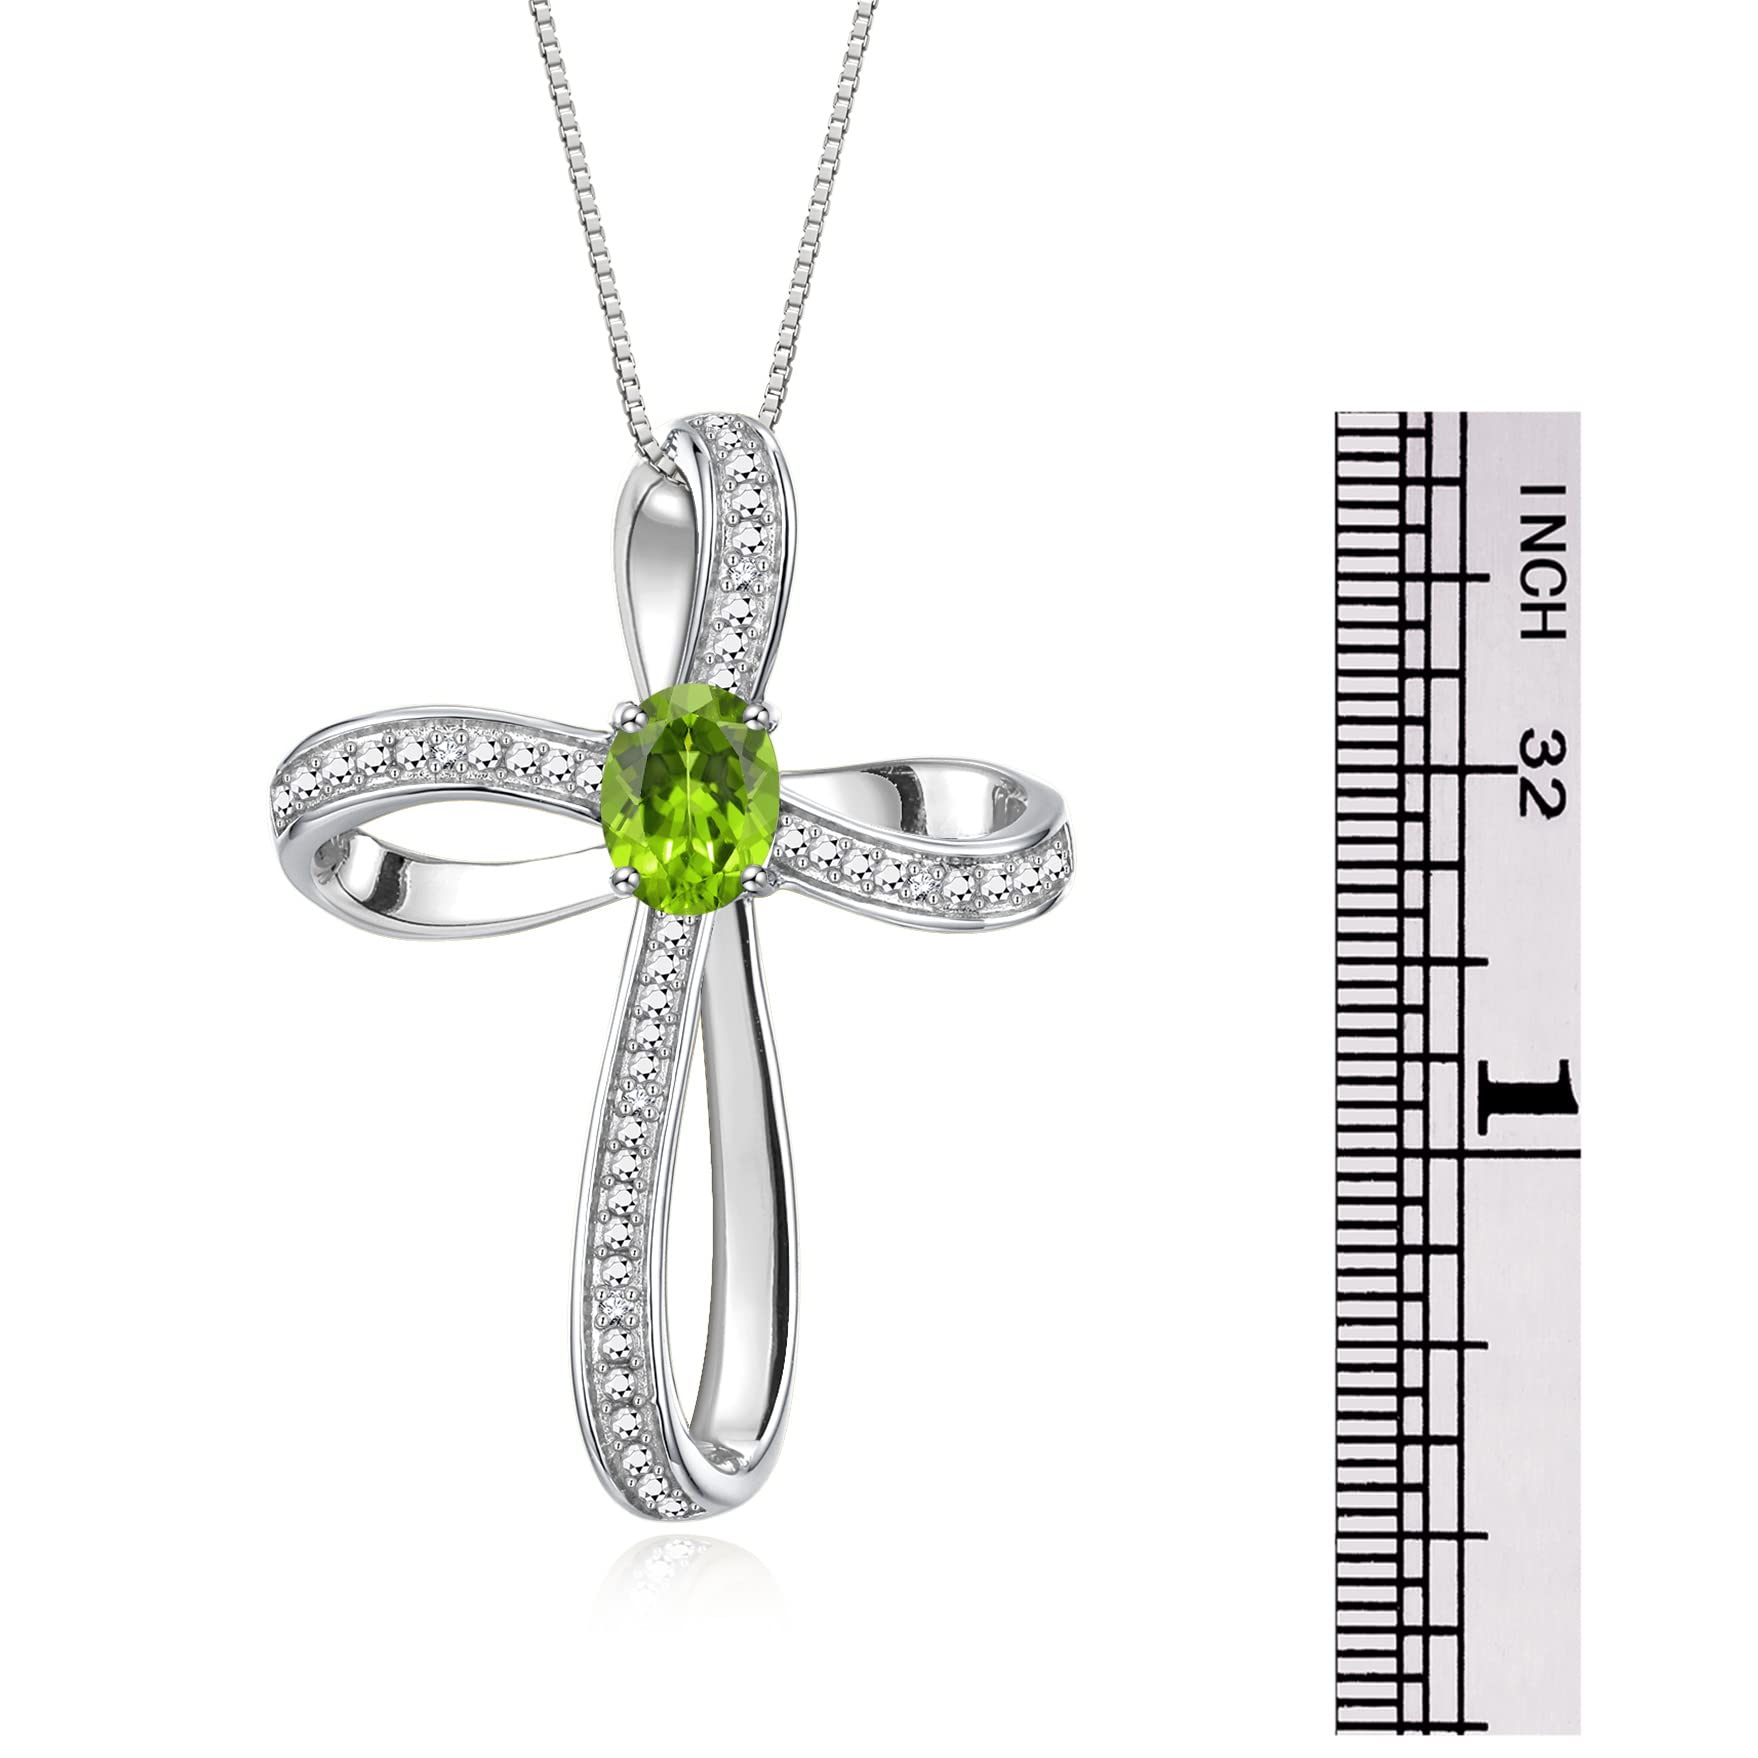 Rylos Sterling Silver Cross Necklace: Gemstone & Diamond Pendant, 18 Chain, 8X6MM Birthstone, Elegant Women's Jewelry